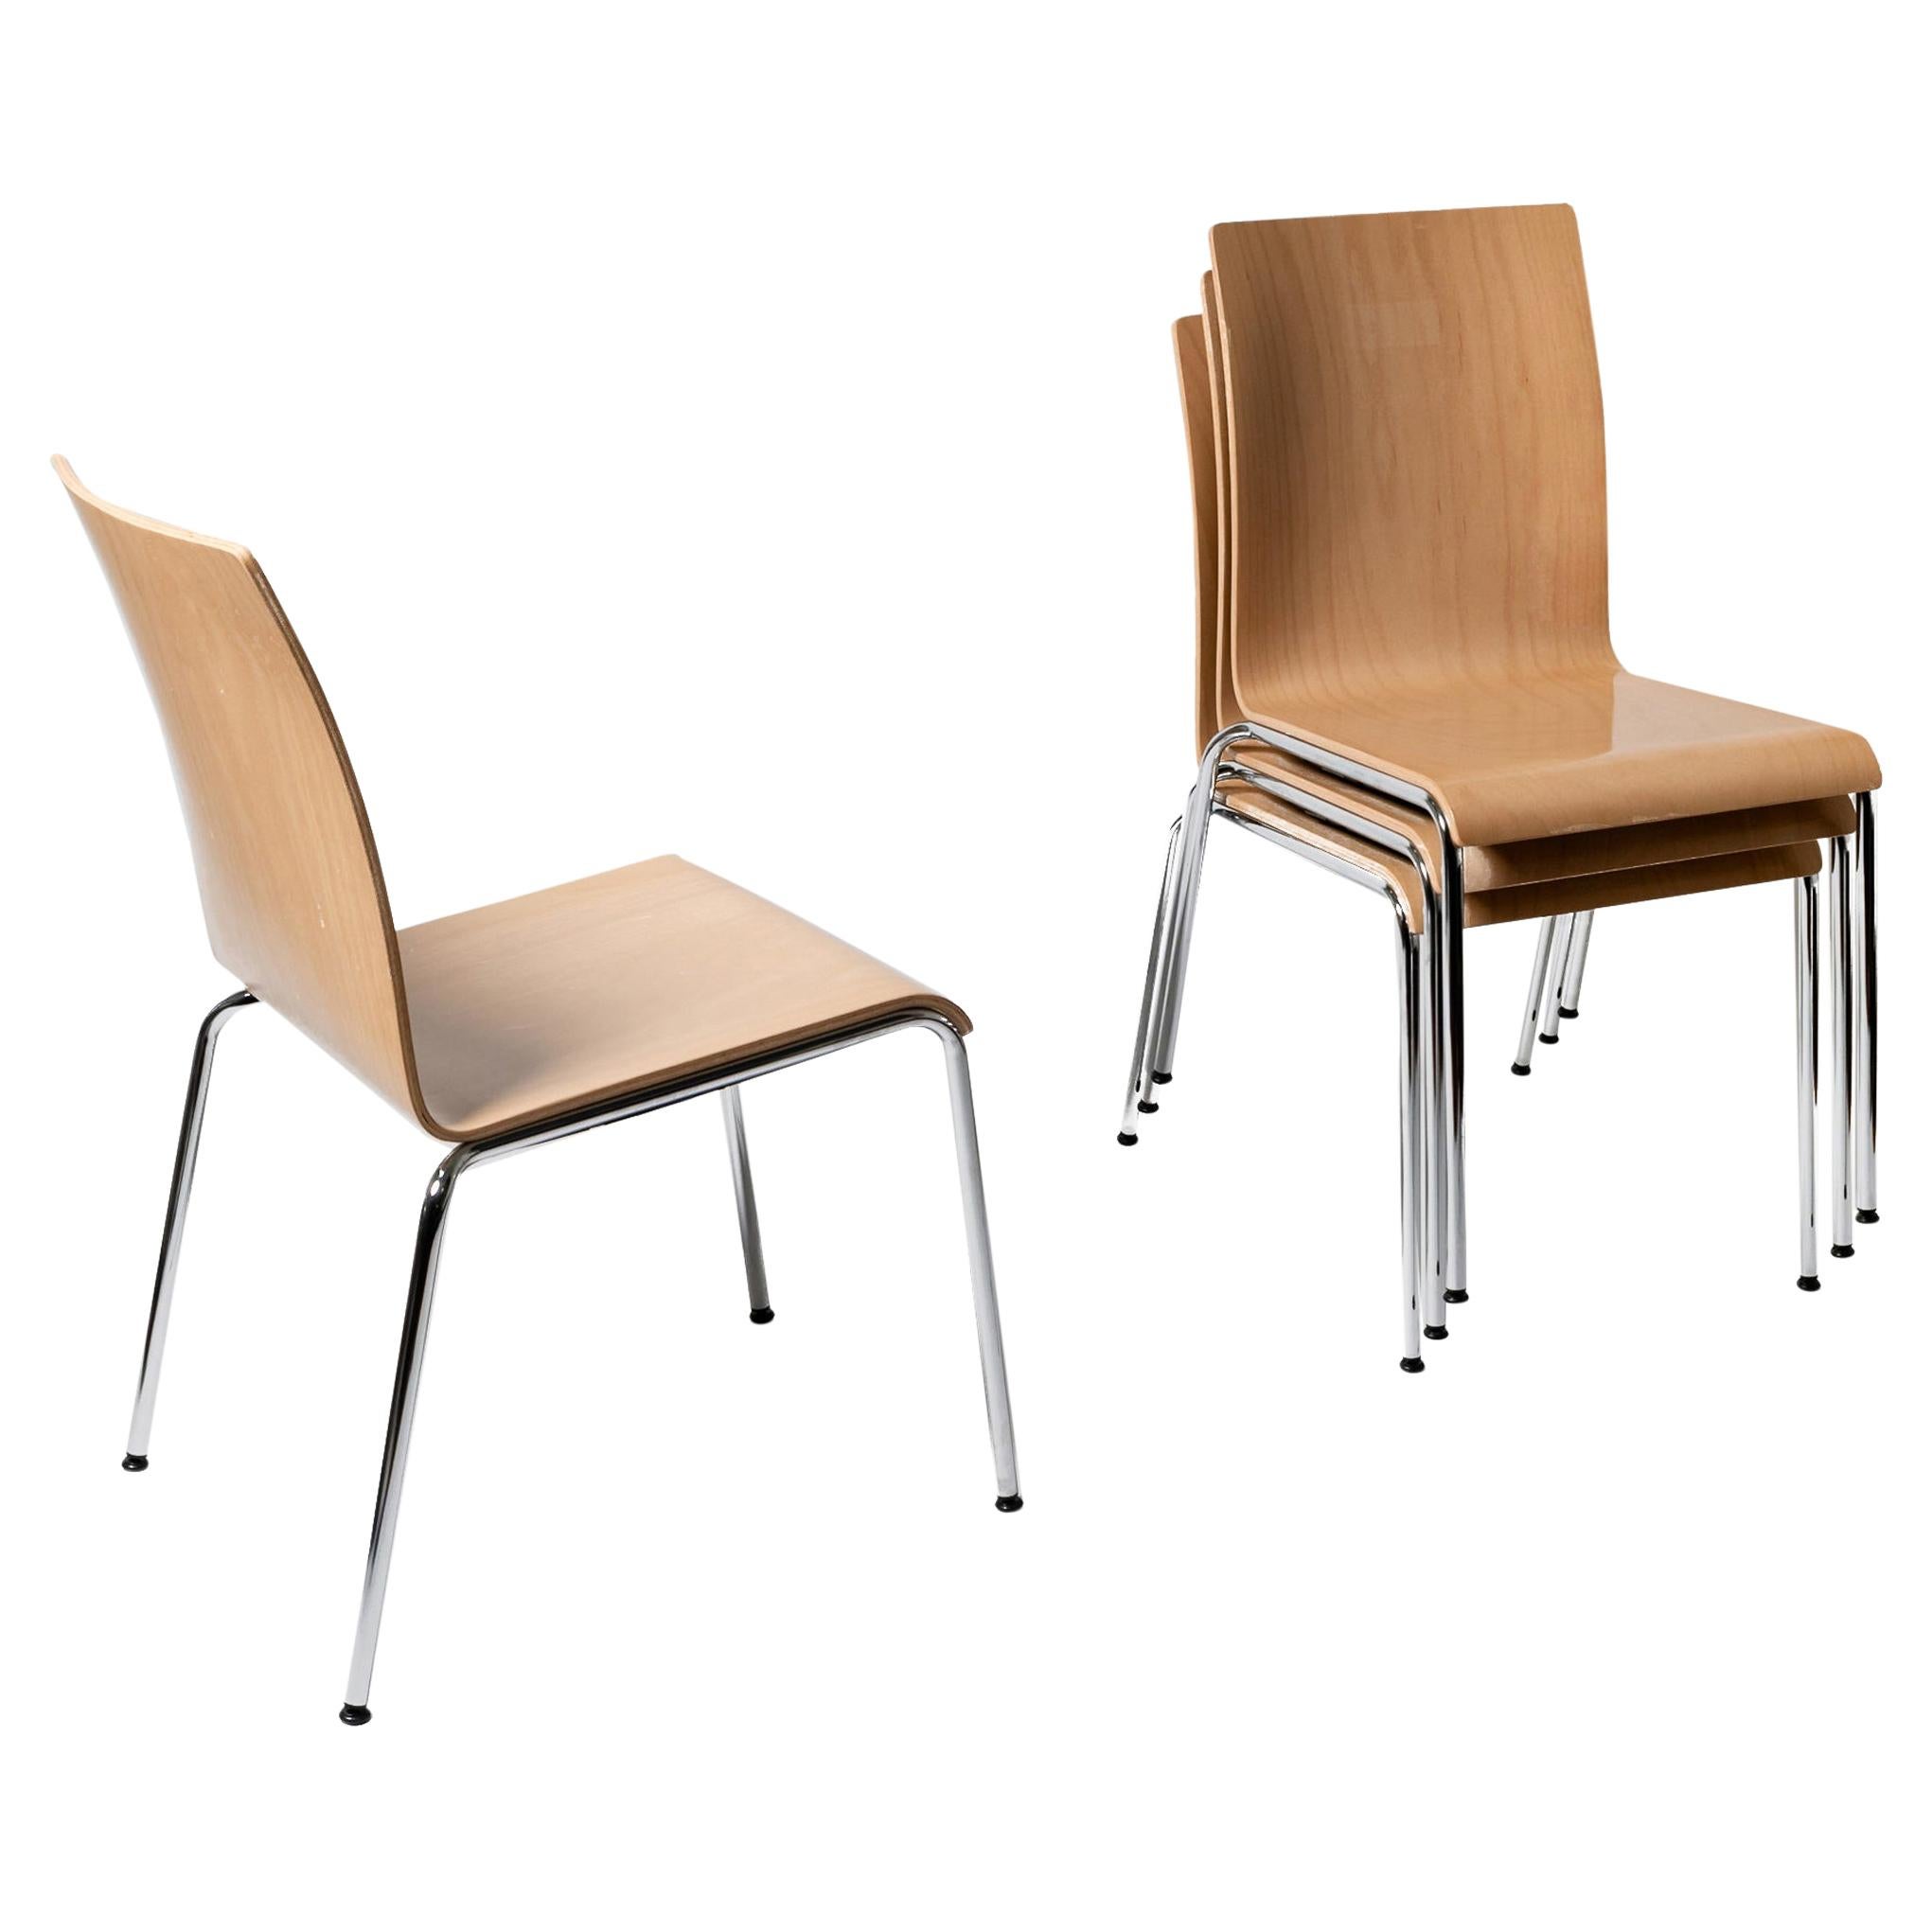 Set of 4 Scandinavian Modern Poro S Dining Chairs in Beech, Made in Switzerland